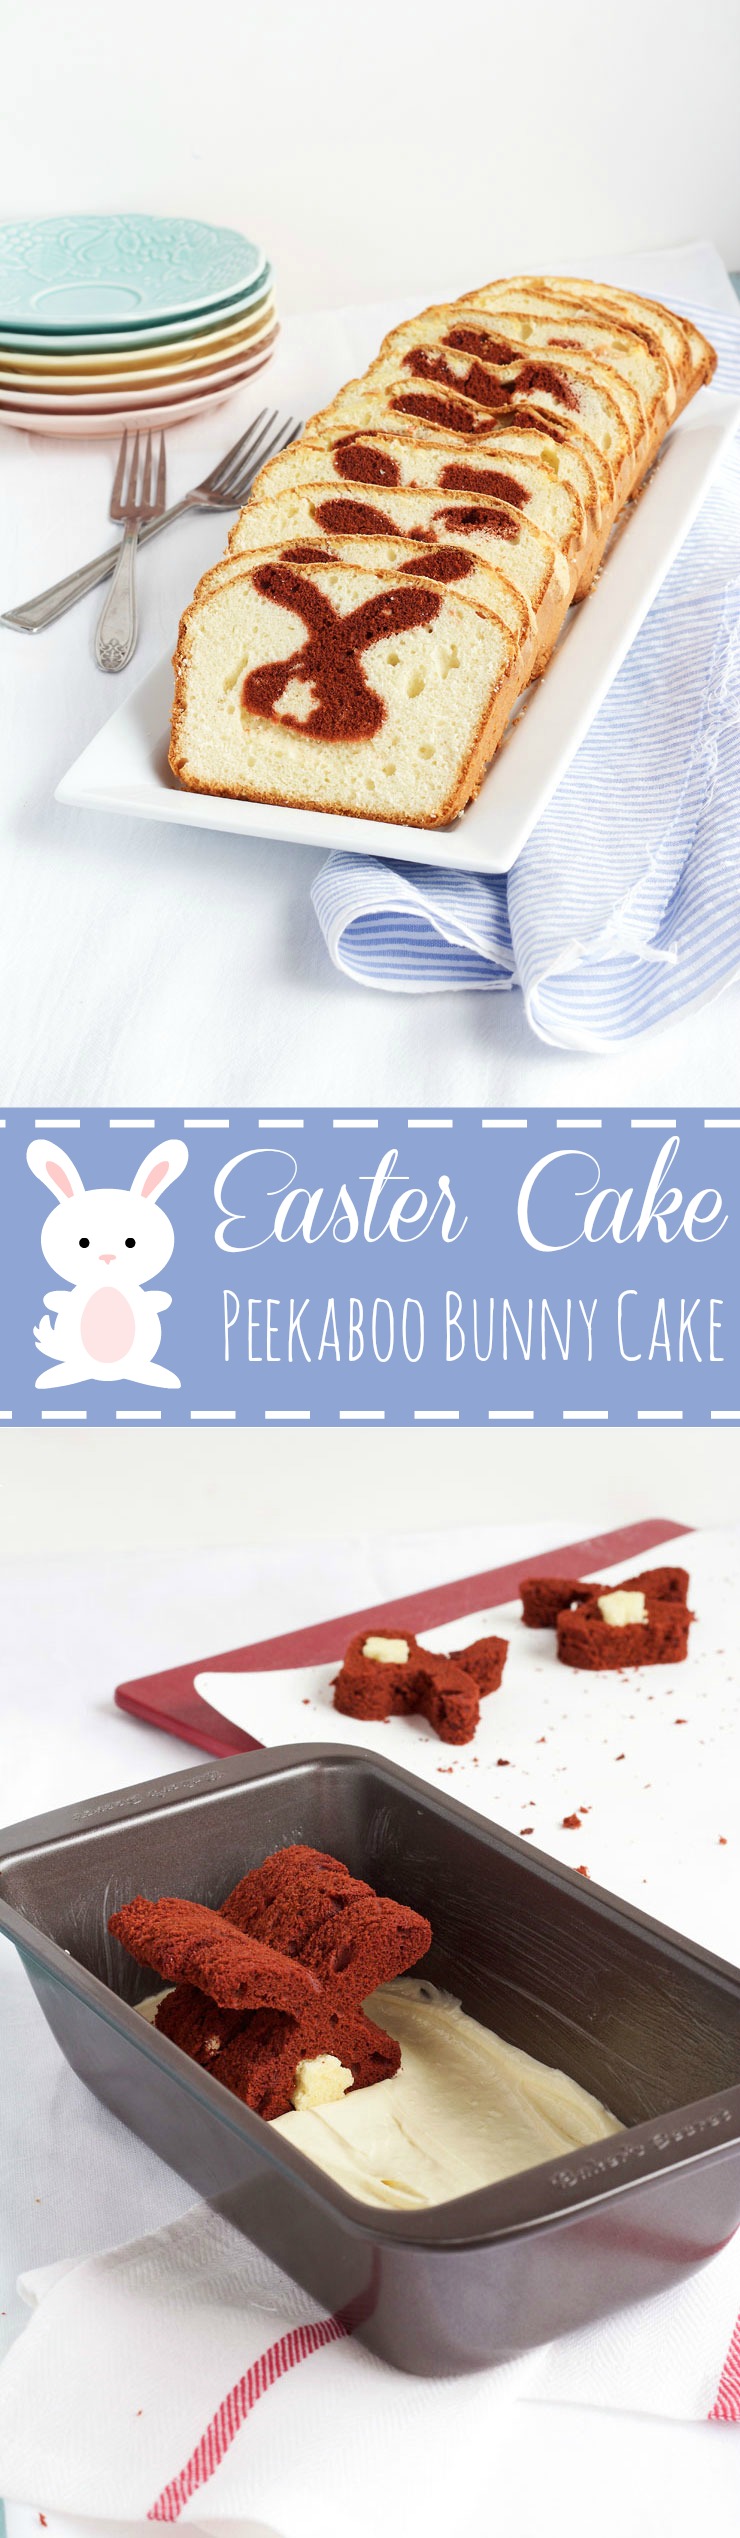 Make this Simple Easter Cake - A Peekaboo Pound Cake with a Bunny Inside www.thebearfootbaker.com